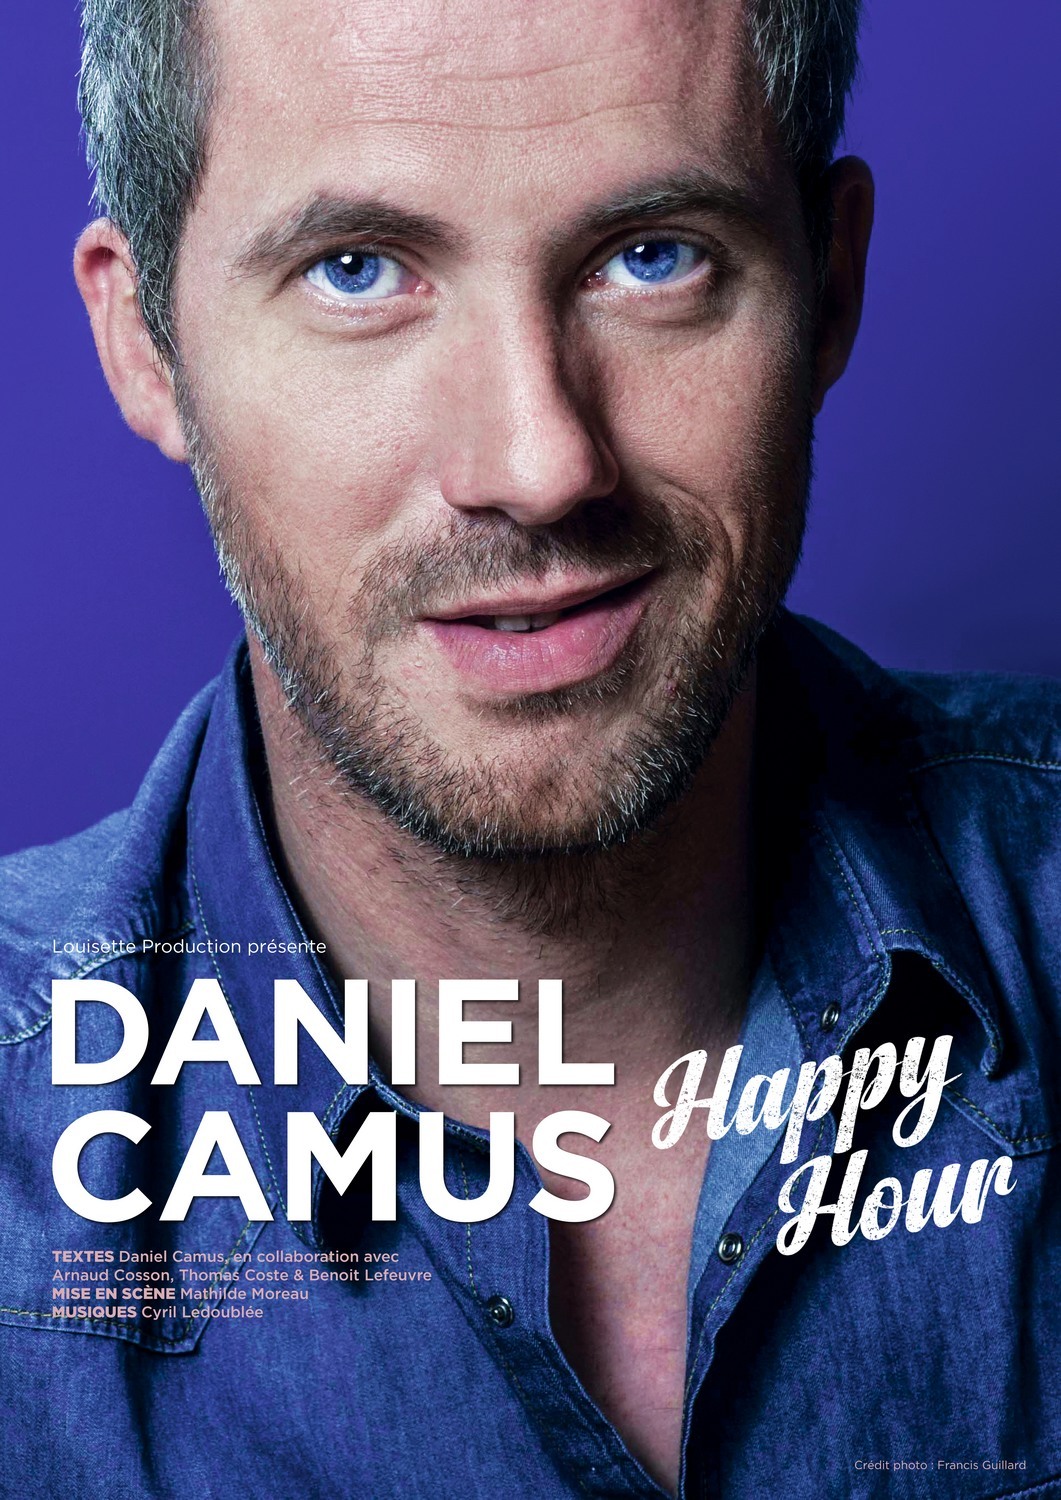 Daniel Camus dans "Happy Hour"